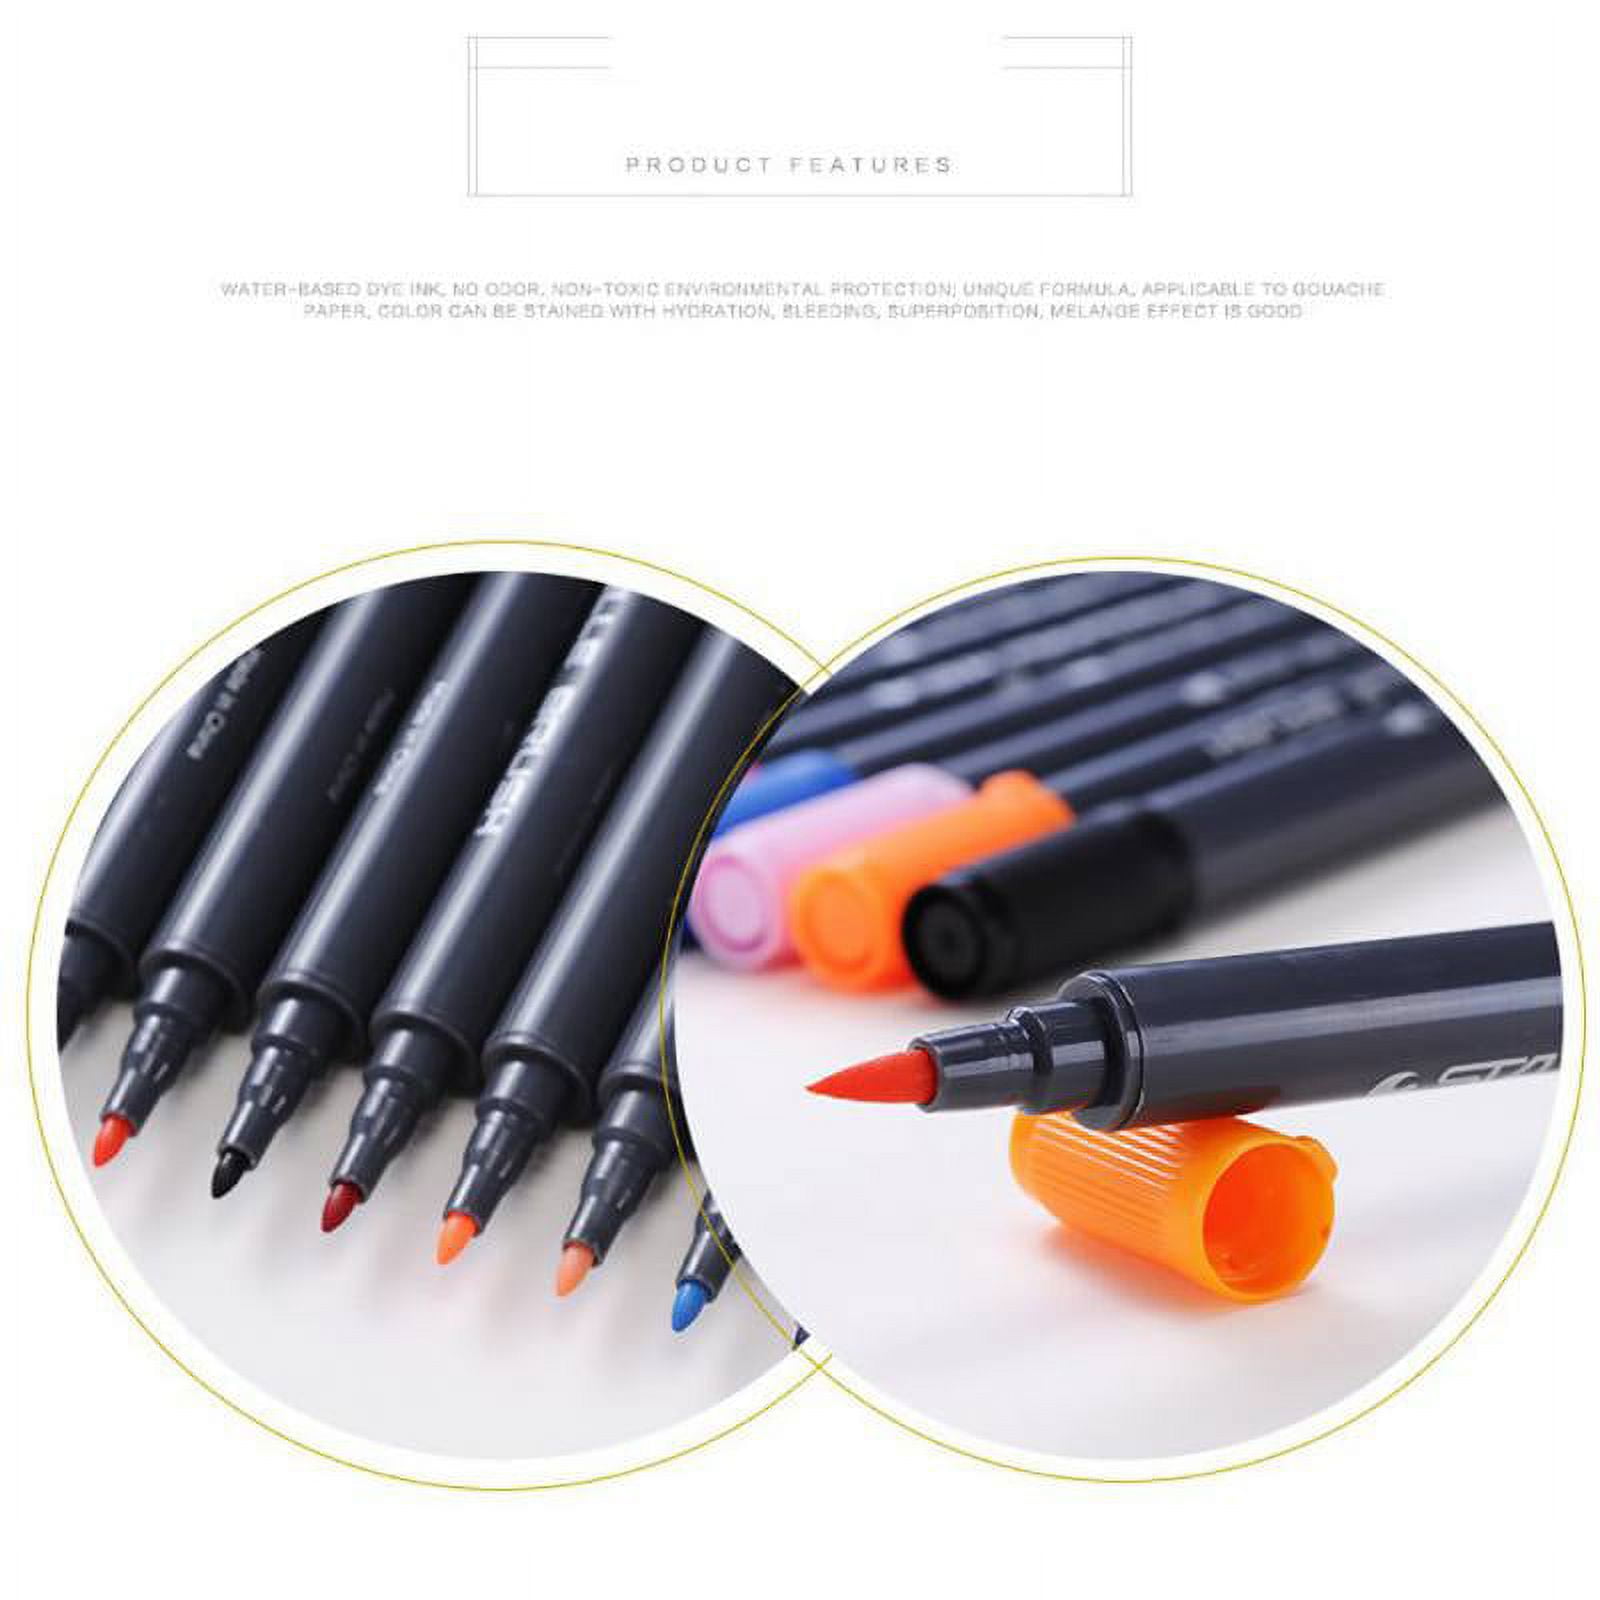 on X: Bianyo Premium Dual Tip Brush Pen,Non-Toxic Water